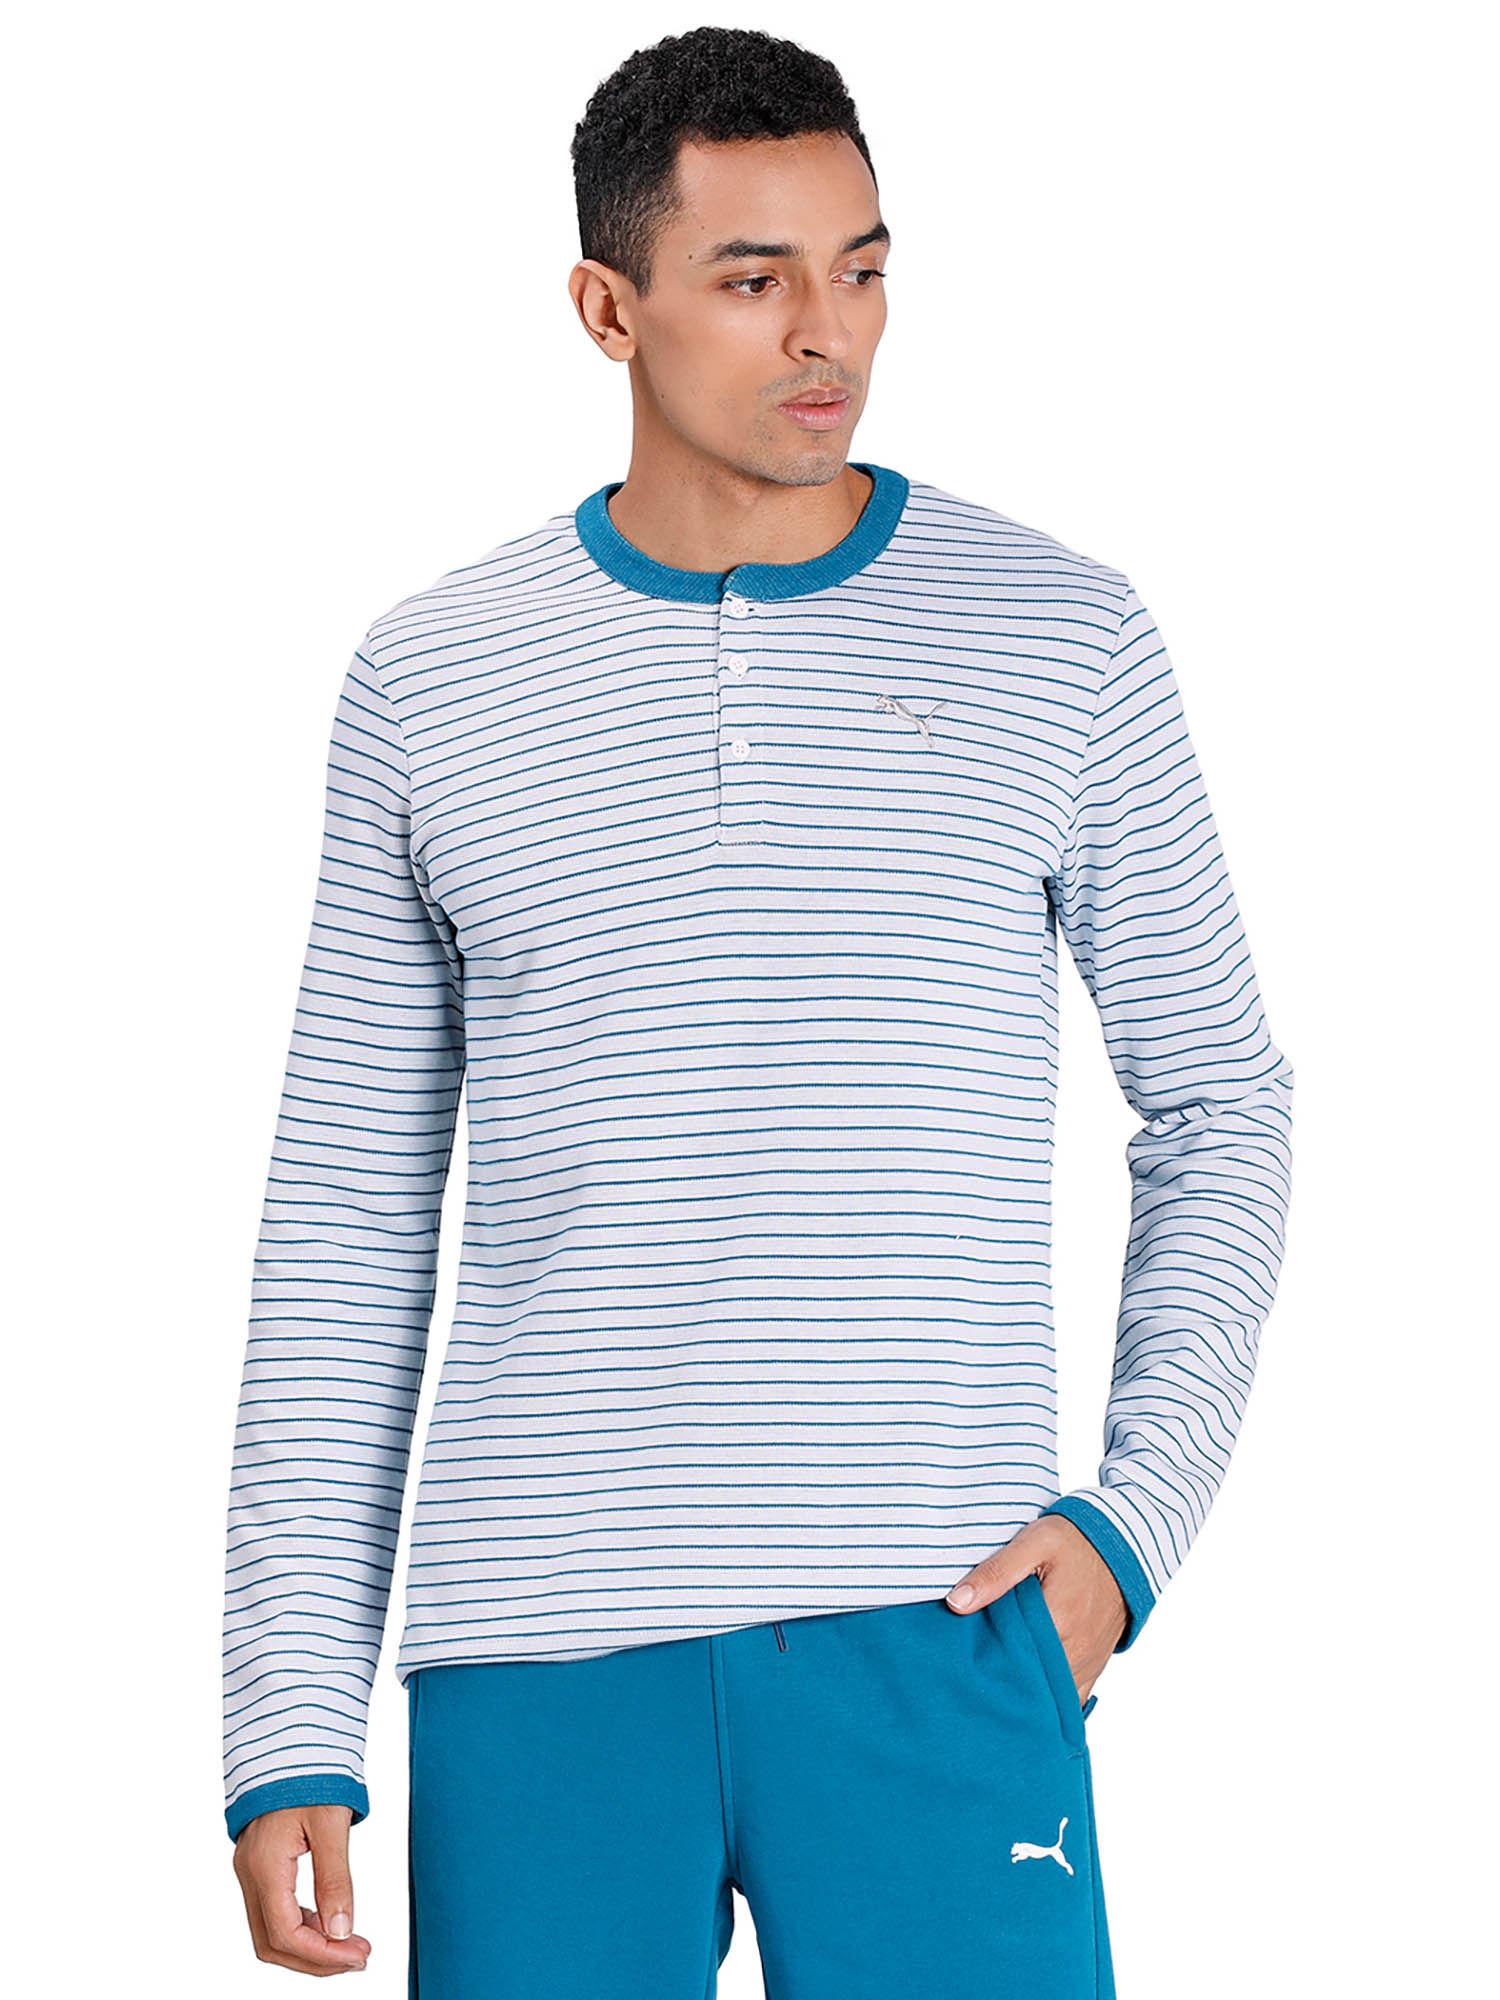 blue stripes sweater